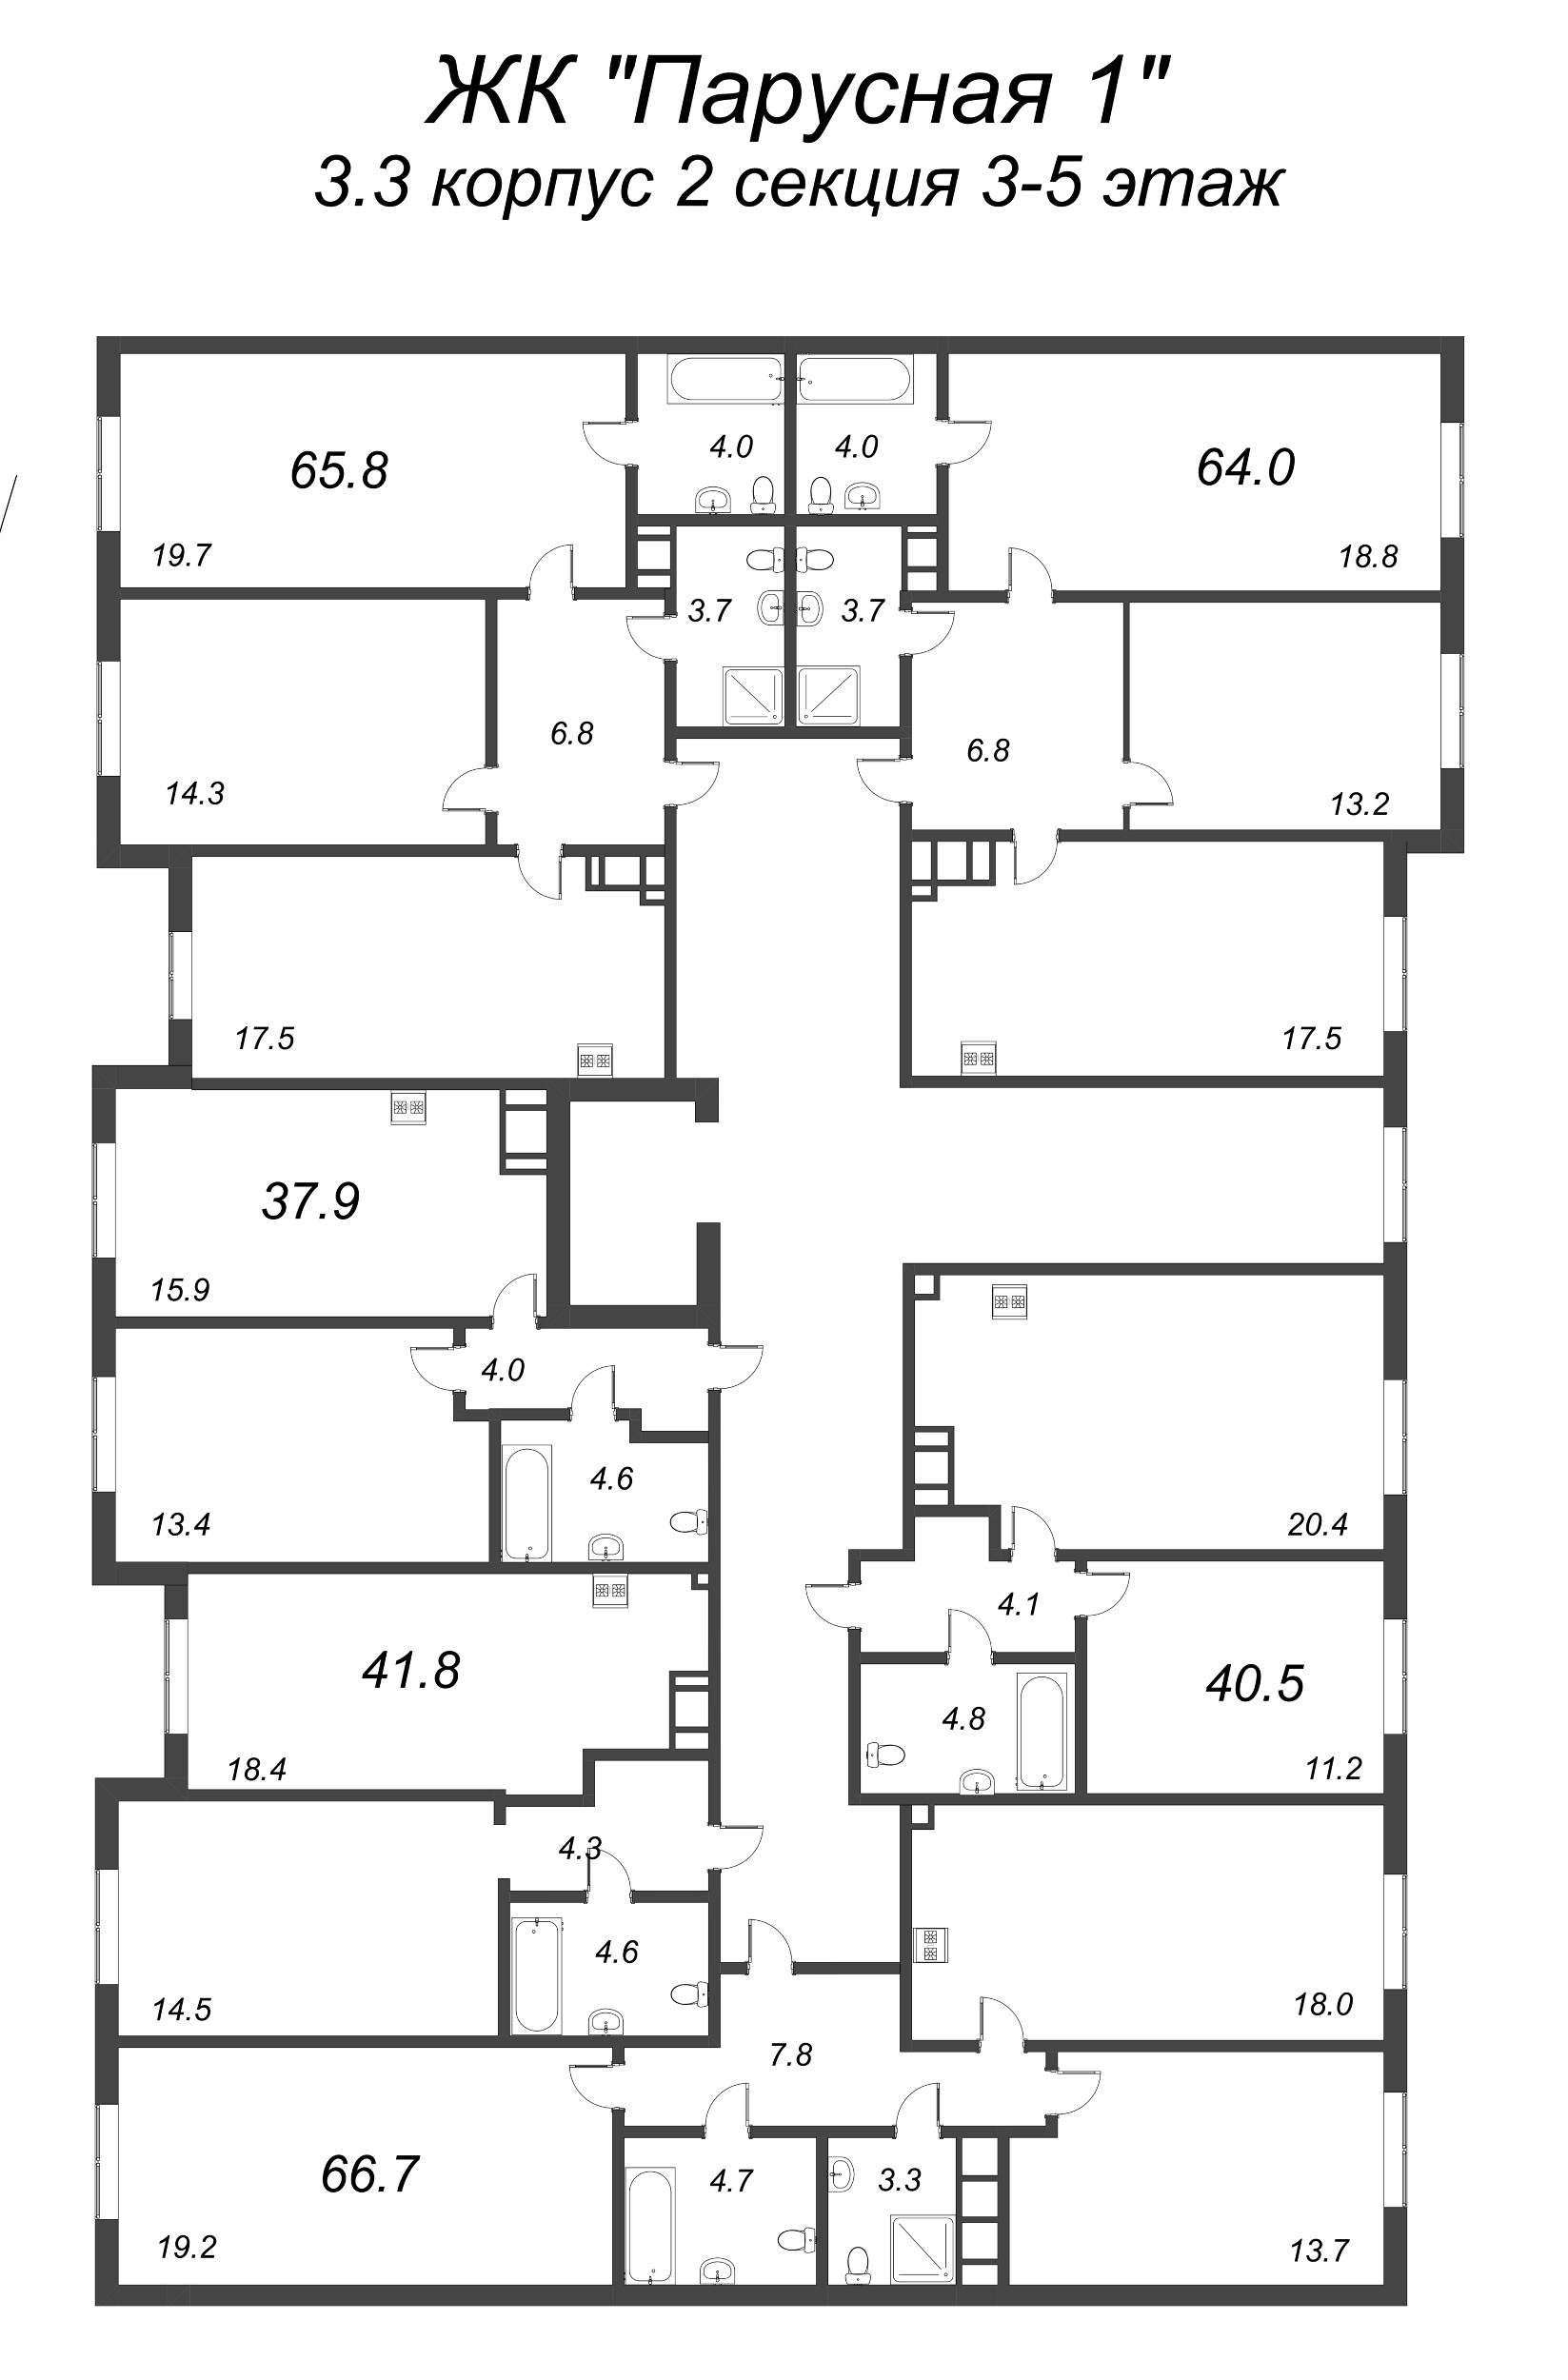 2-комнатная (Евро) квартира, 37.9 м² - планировка этажа